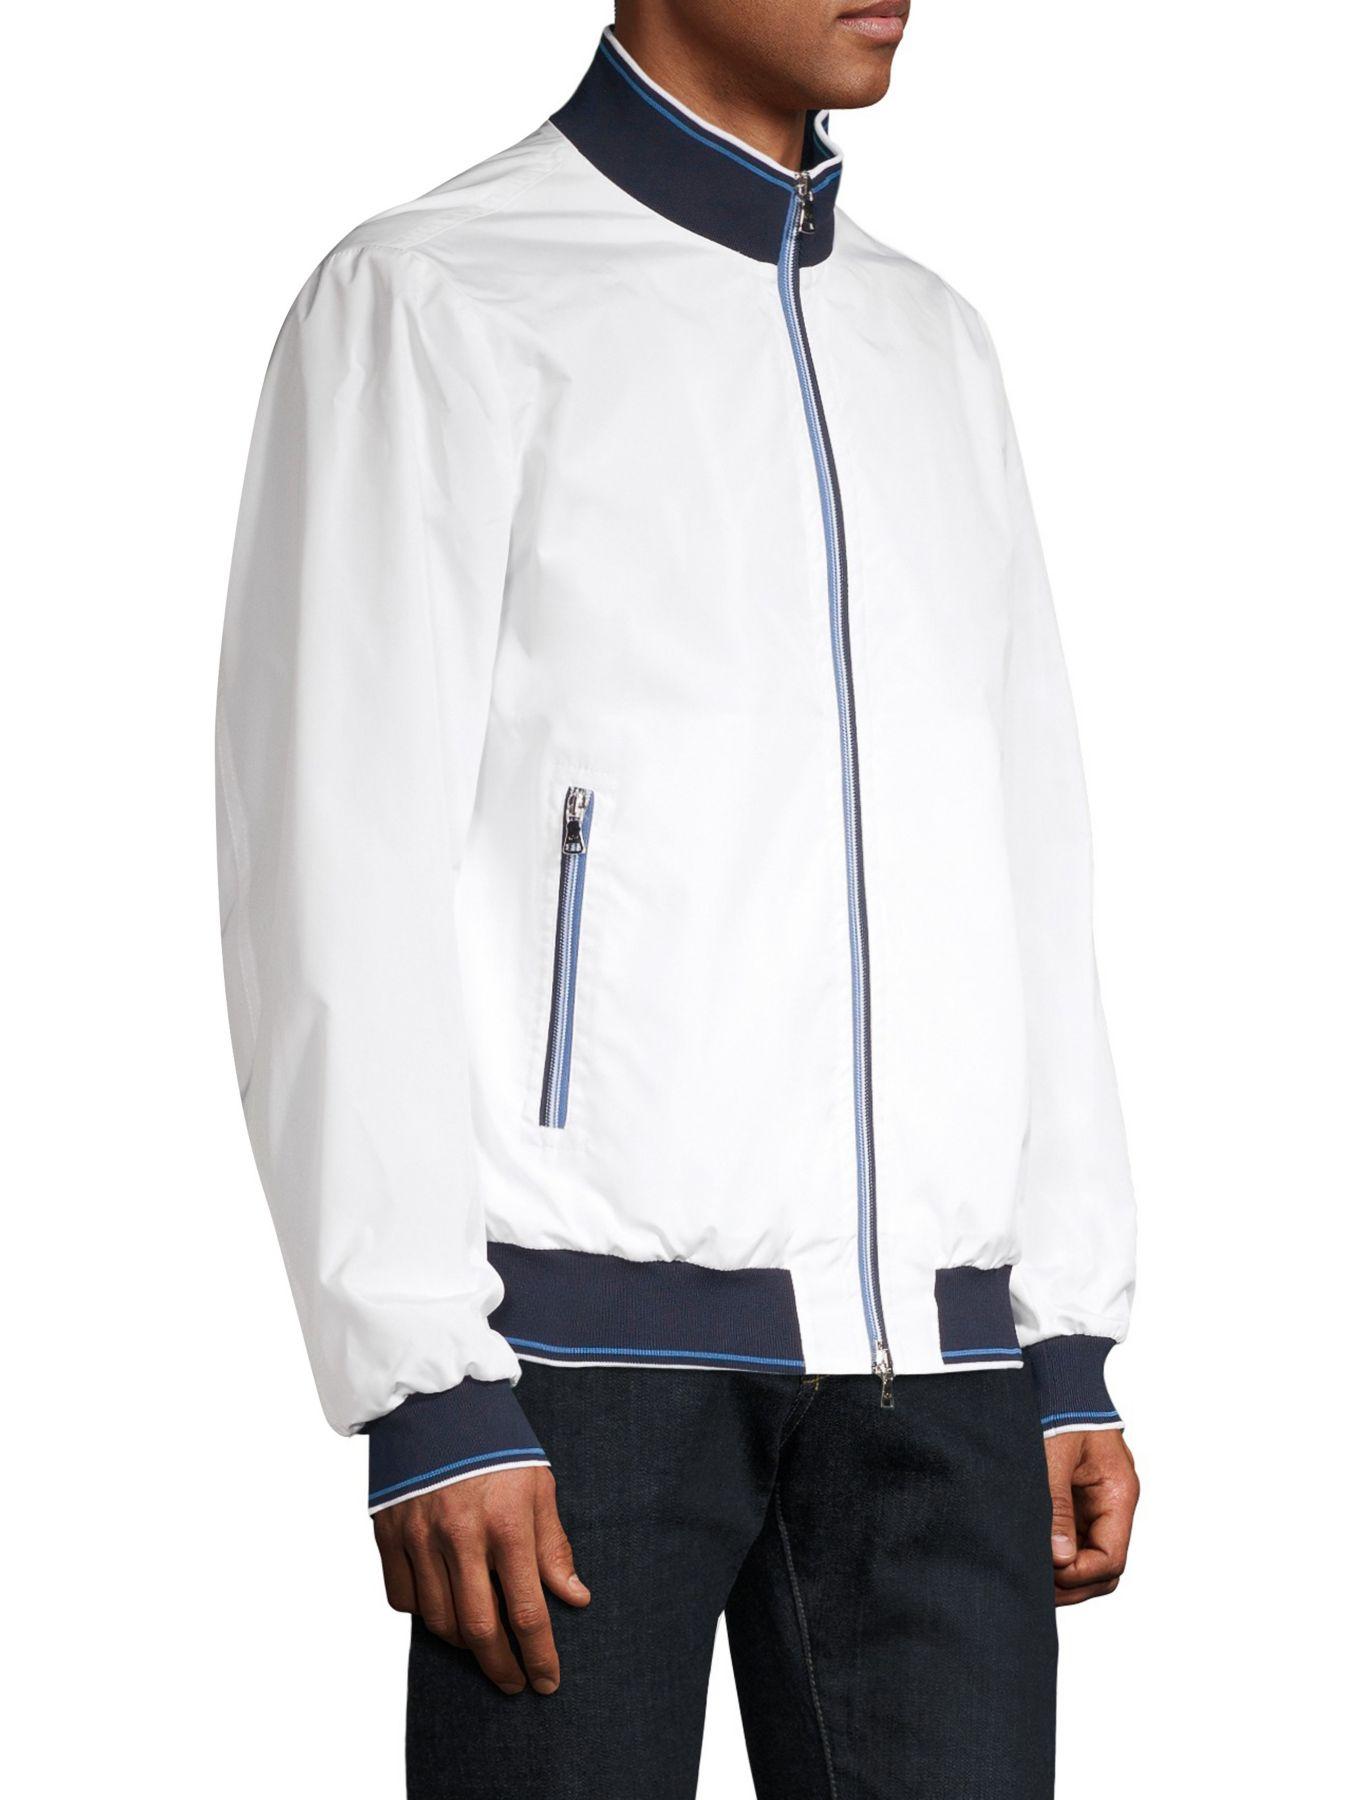 Paul & Shark Cotton Woven Zip-front Jacket in White for Men - Lyst